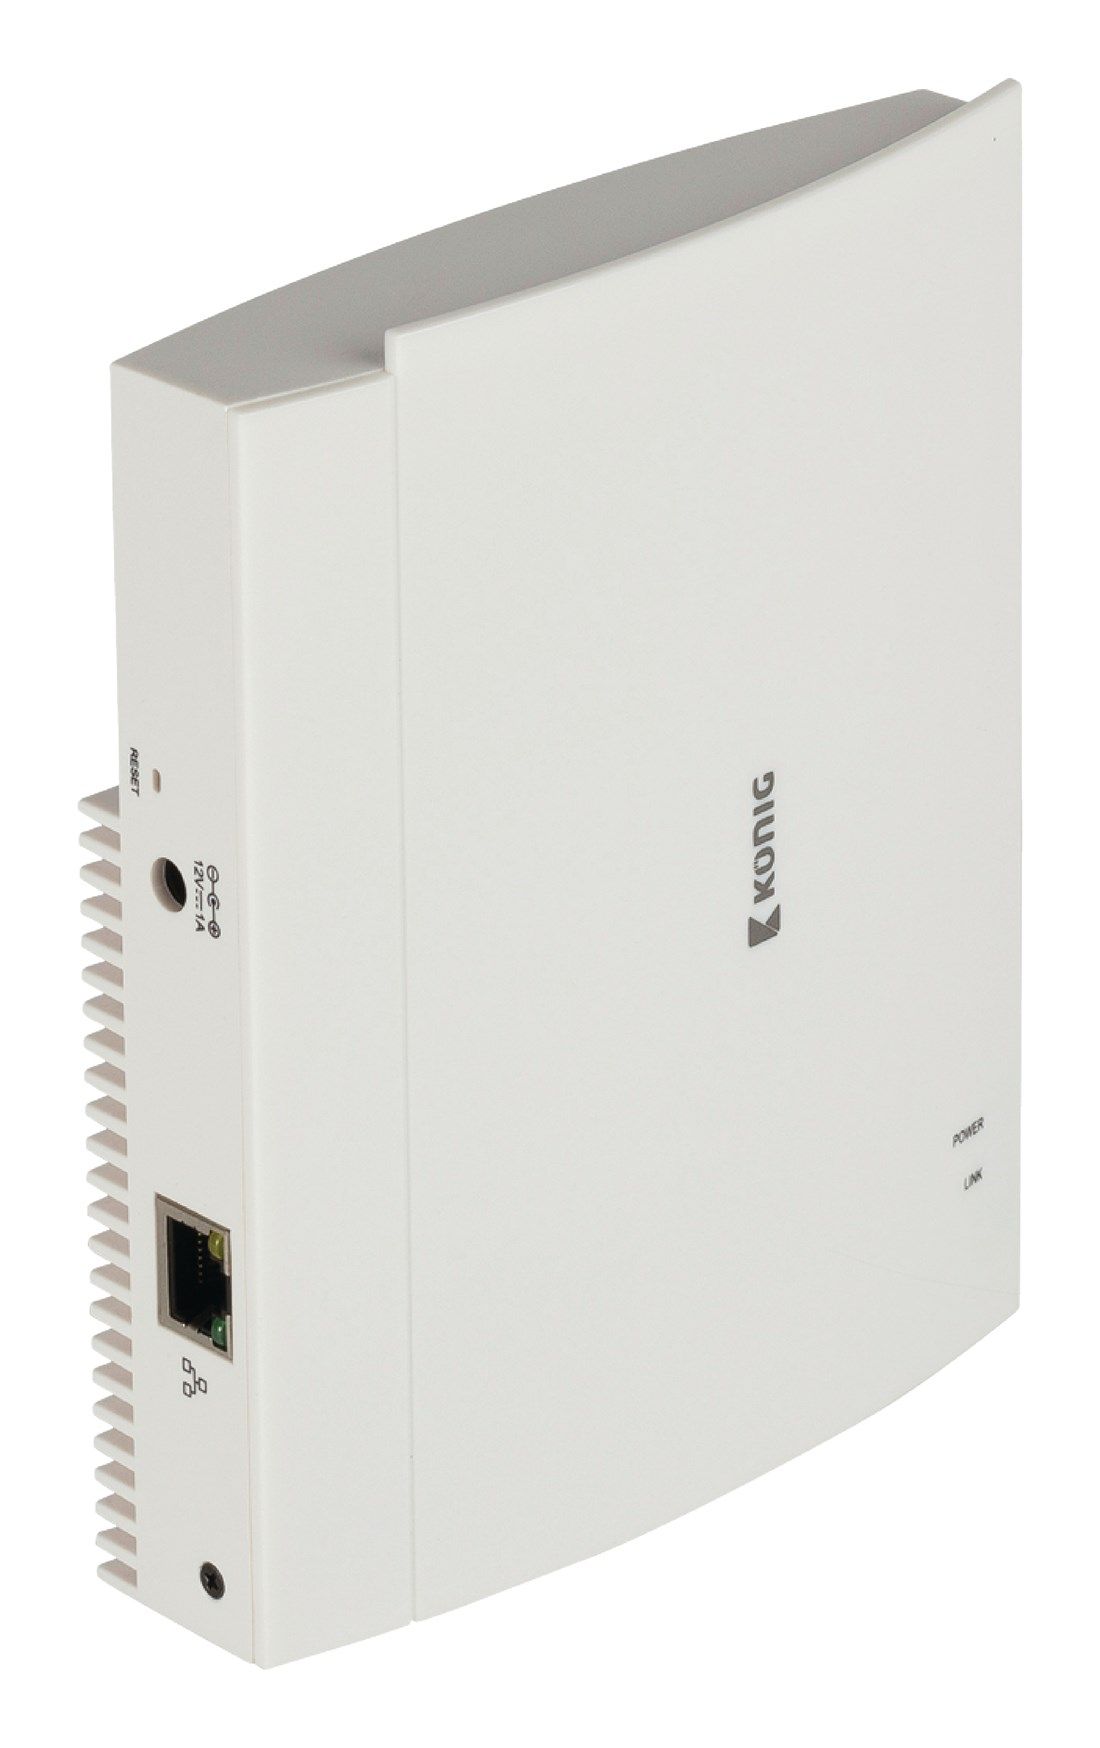 Konig SAS-CLALARM10 CCTV Smart Home Security Set